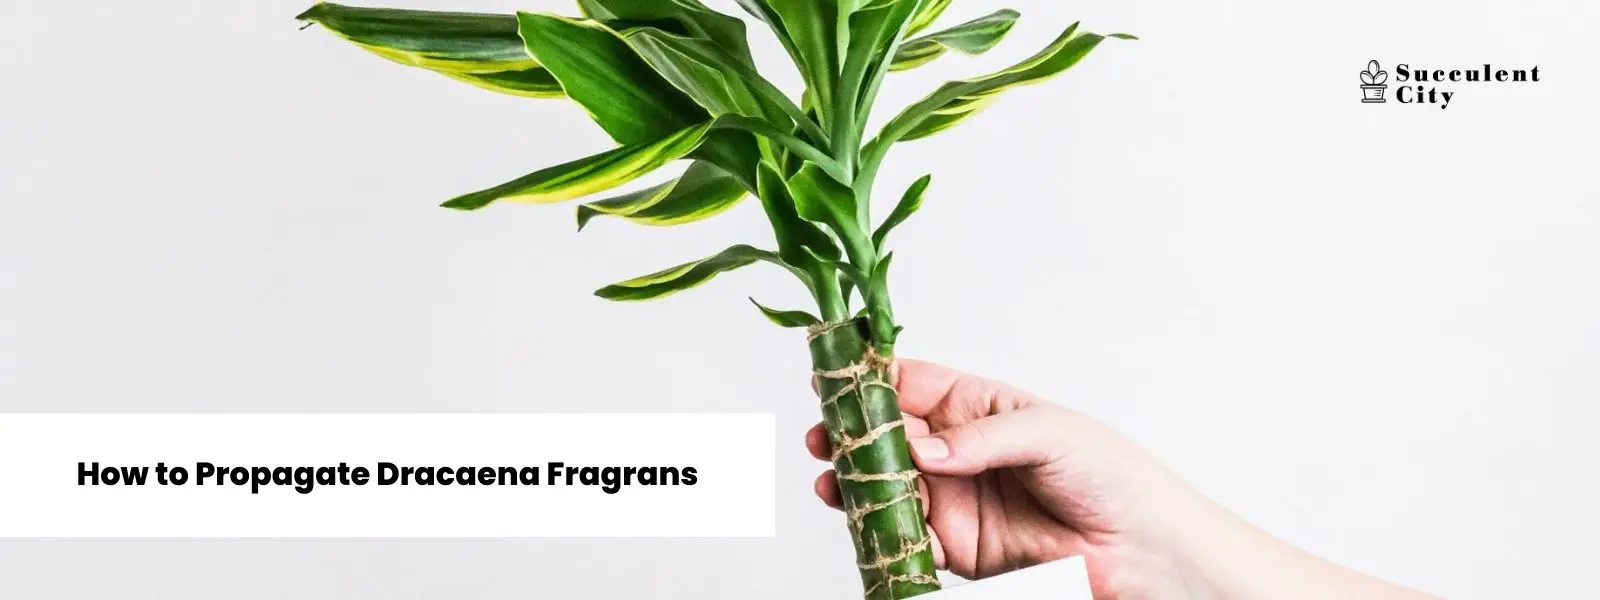 Cómo propagar Dracaena Fragrans (propagación de plantas de maíz).